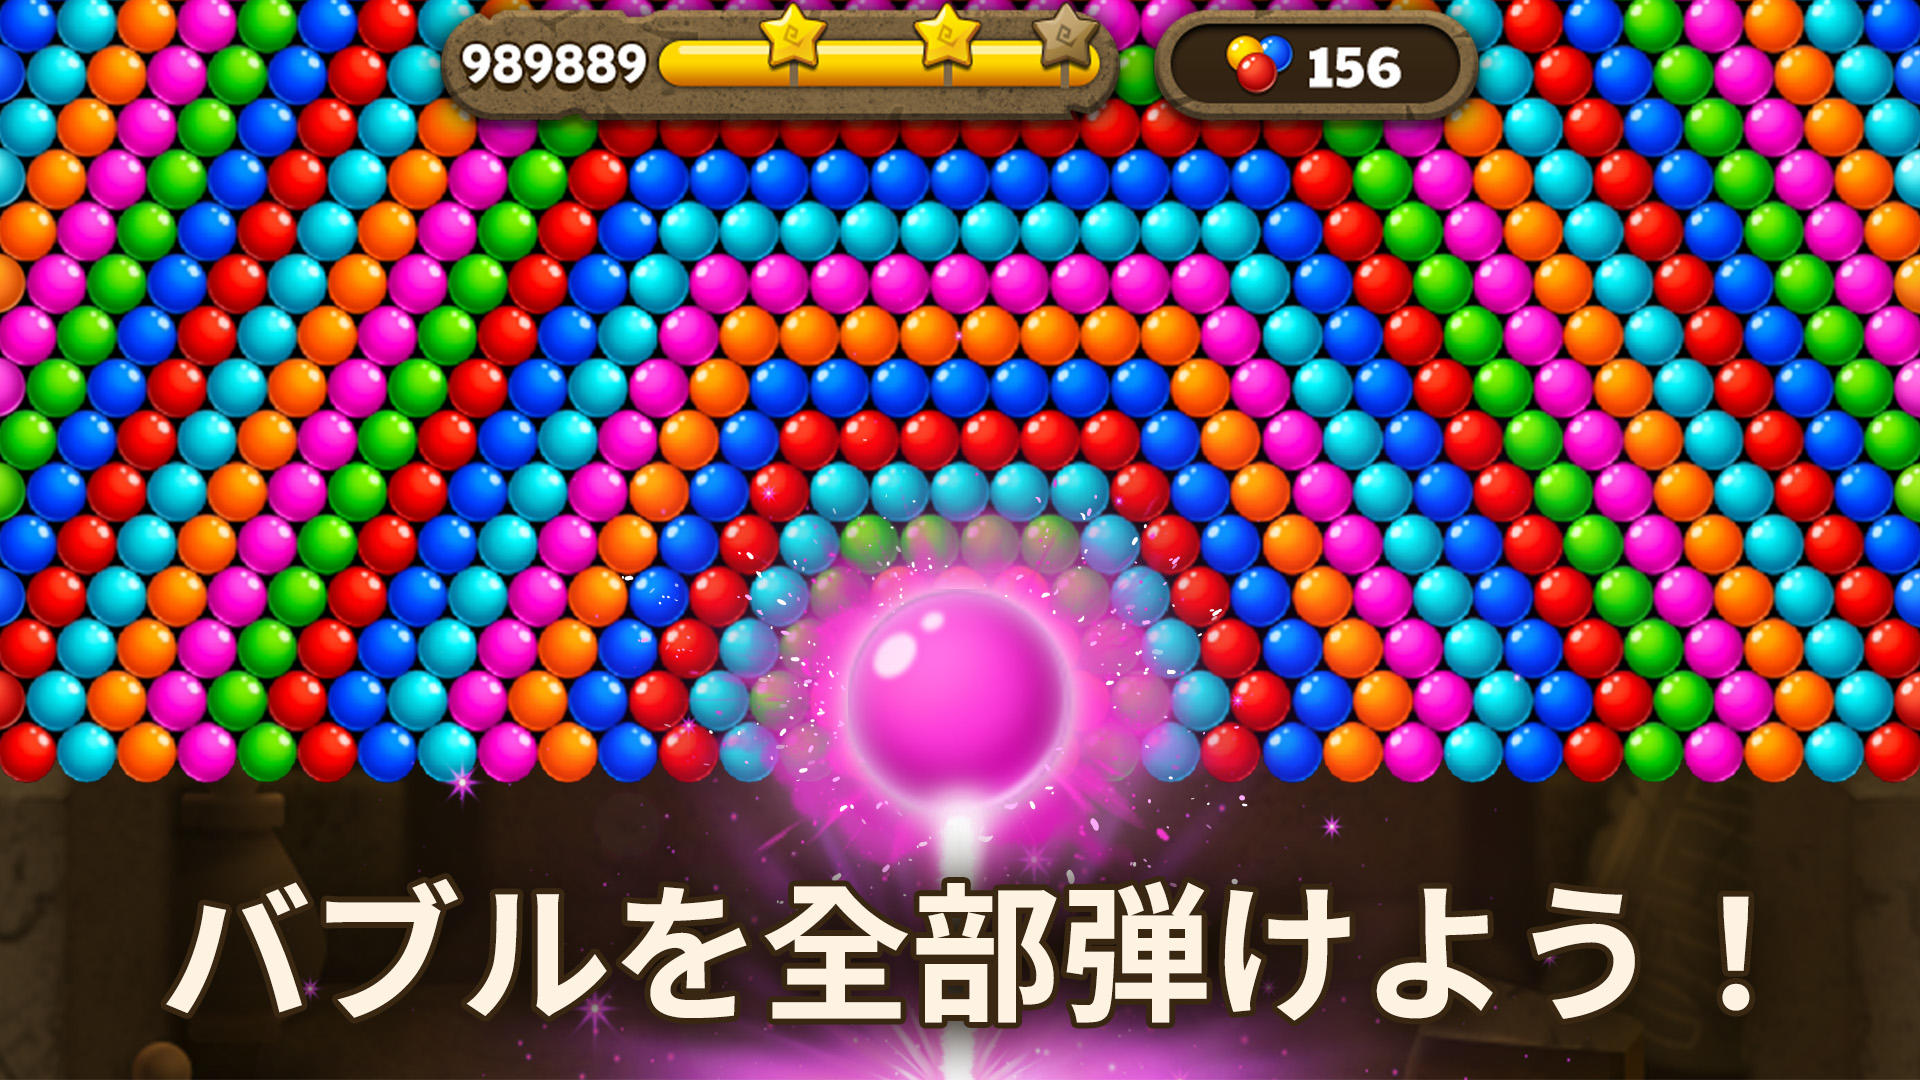 Screenshot 1 of Bubble Pop Origin! Puzzle Game 24.0418.00